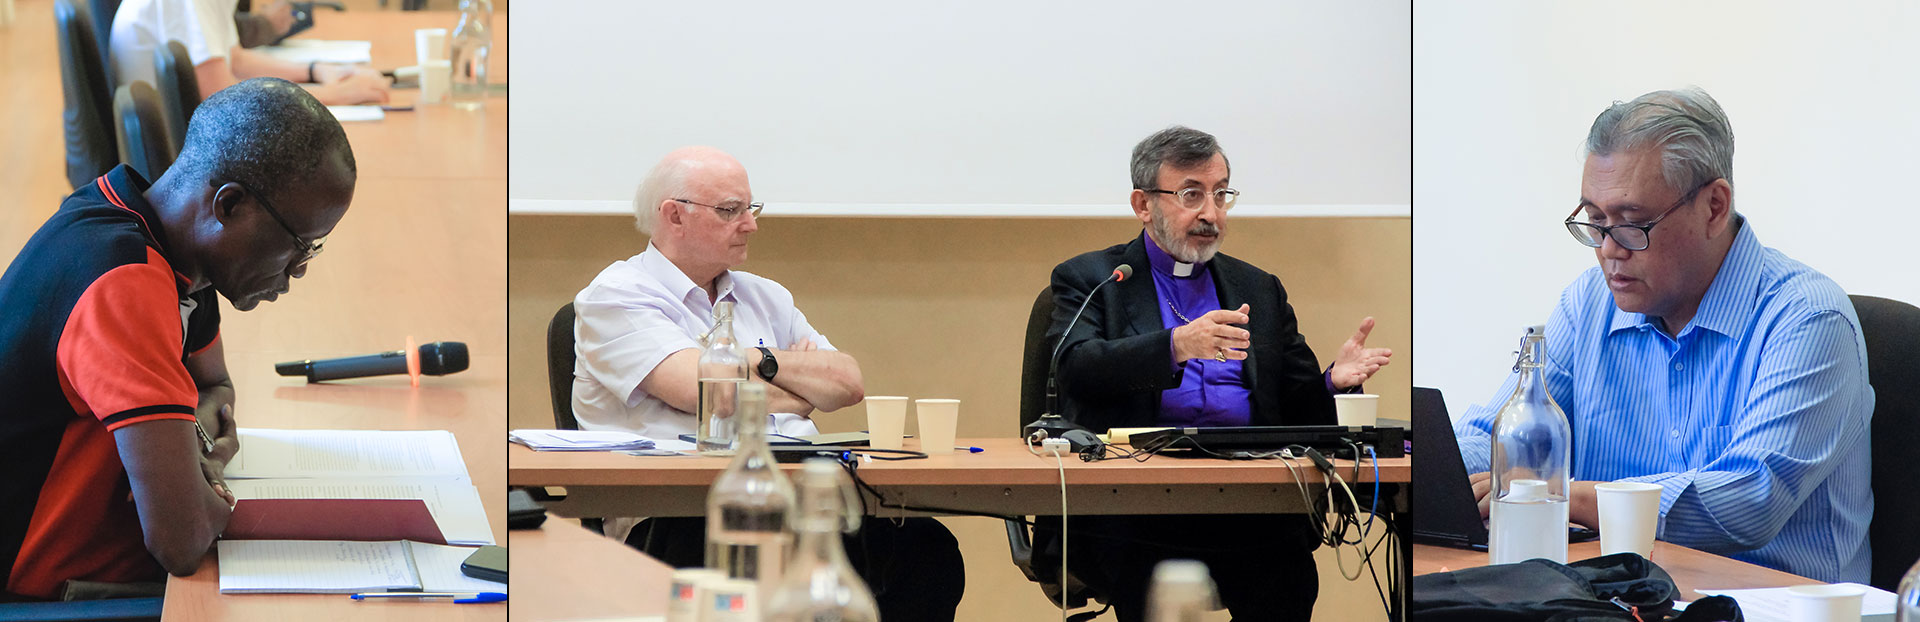 Ecumenism and interreligious dialogue: still on the agenda